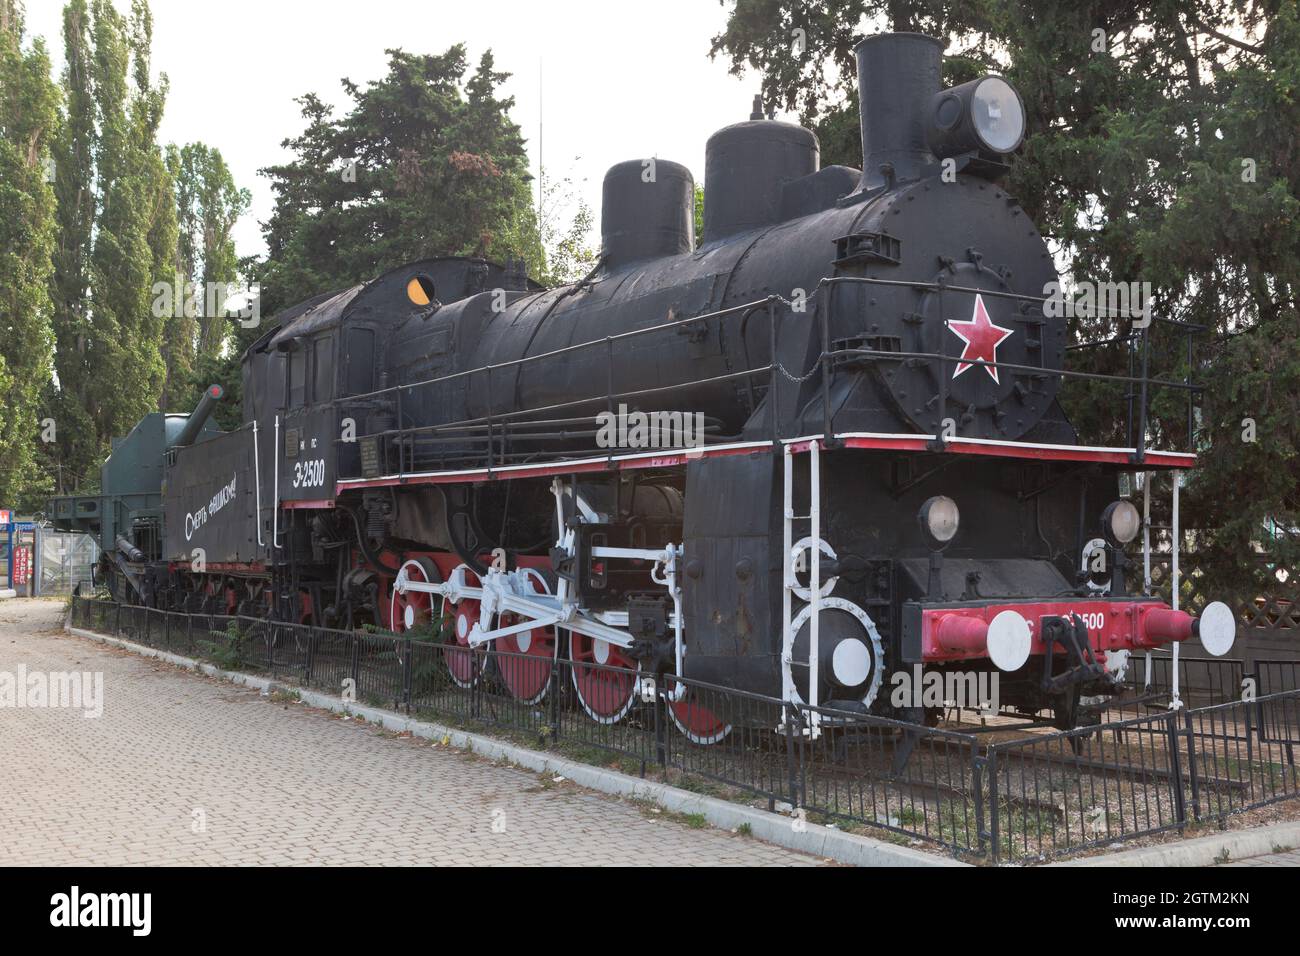 Sevastopol, Crimea, Russia - July 28, 2020: Monument to the armored train Zheleznyakov - the El-2500 steam locomotive and the TM-1-180 railway artille Stock Photo